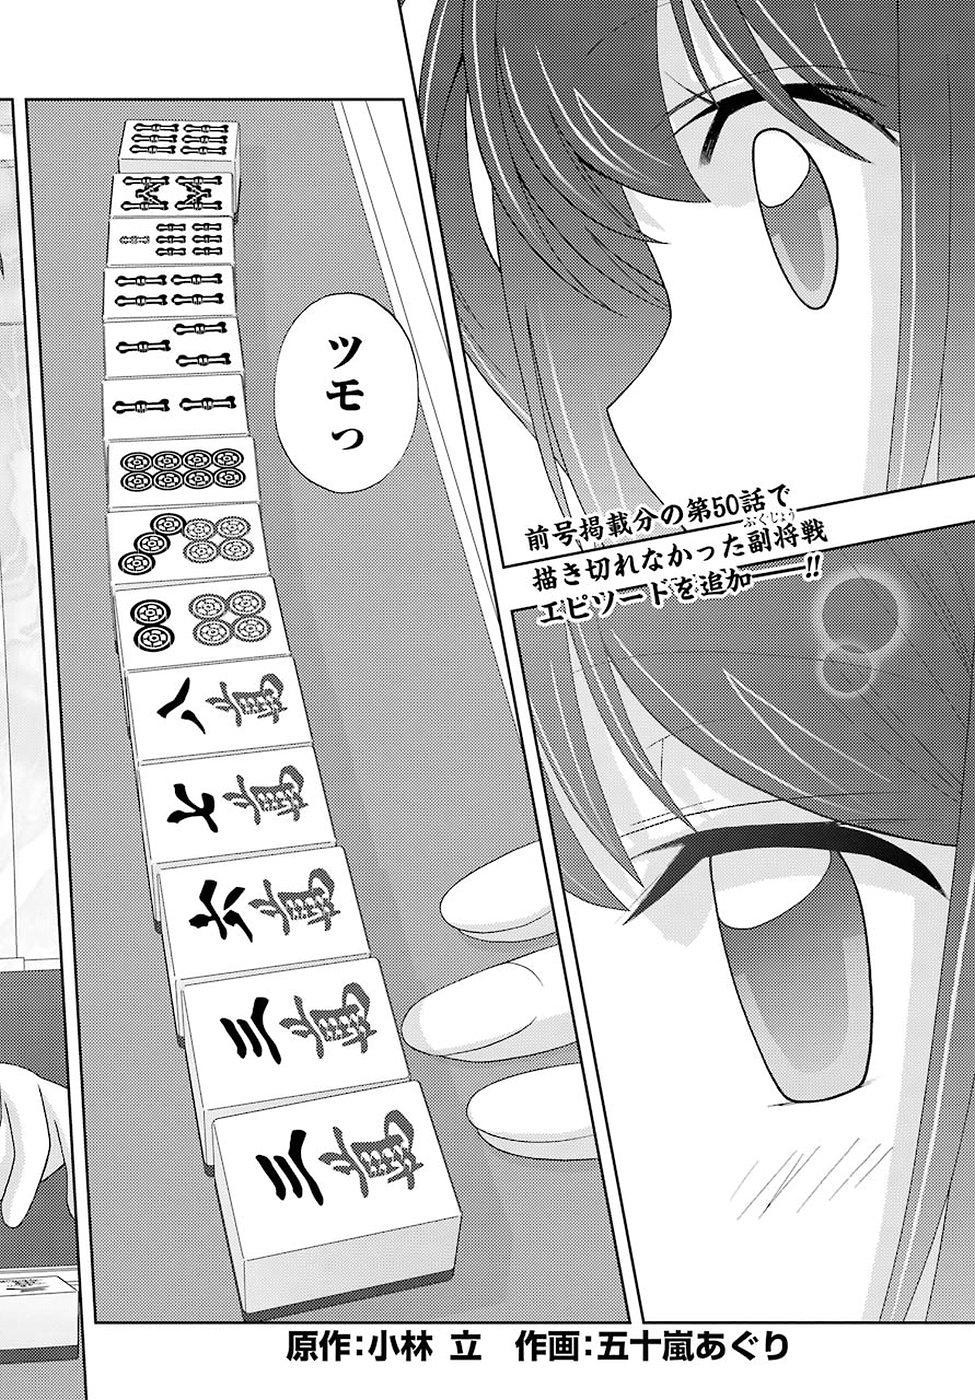 Shinohayu - The Dawn of Age Manga - Chapter 050.5 - Page 1